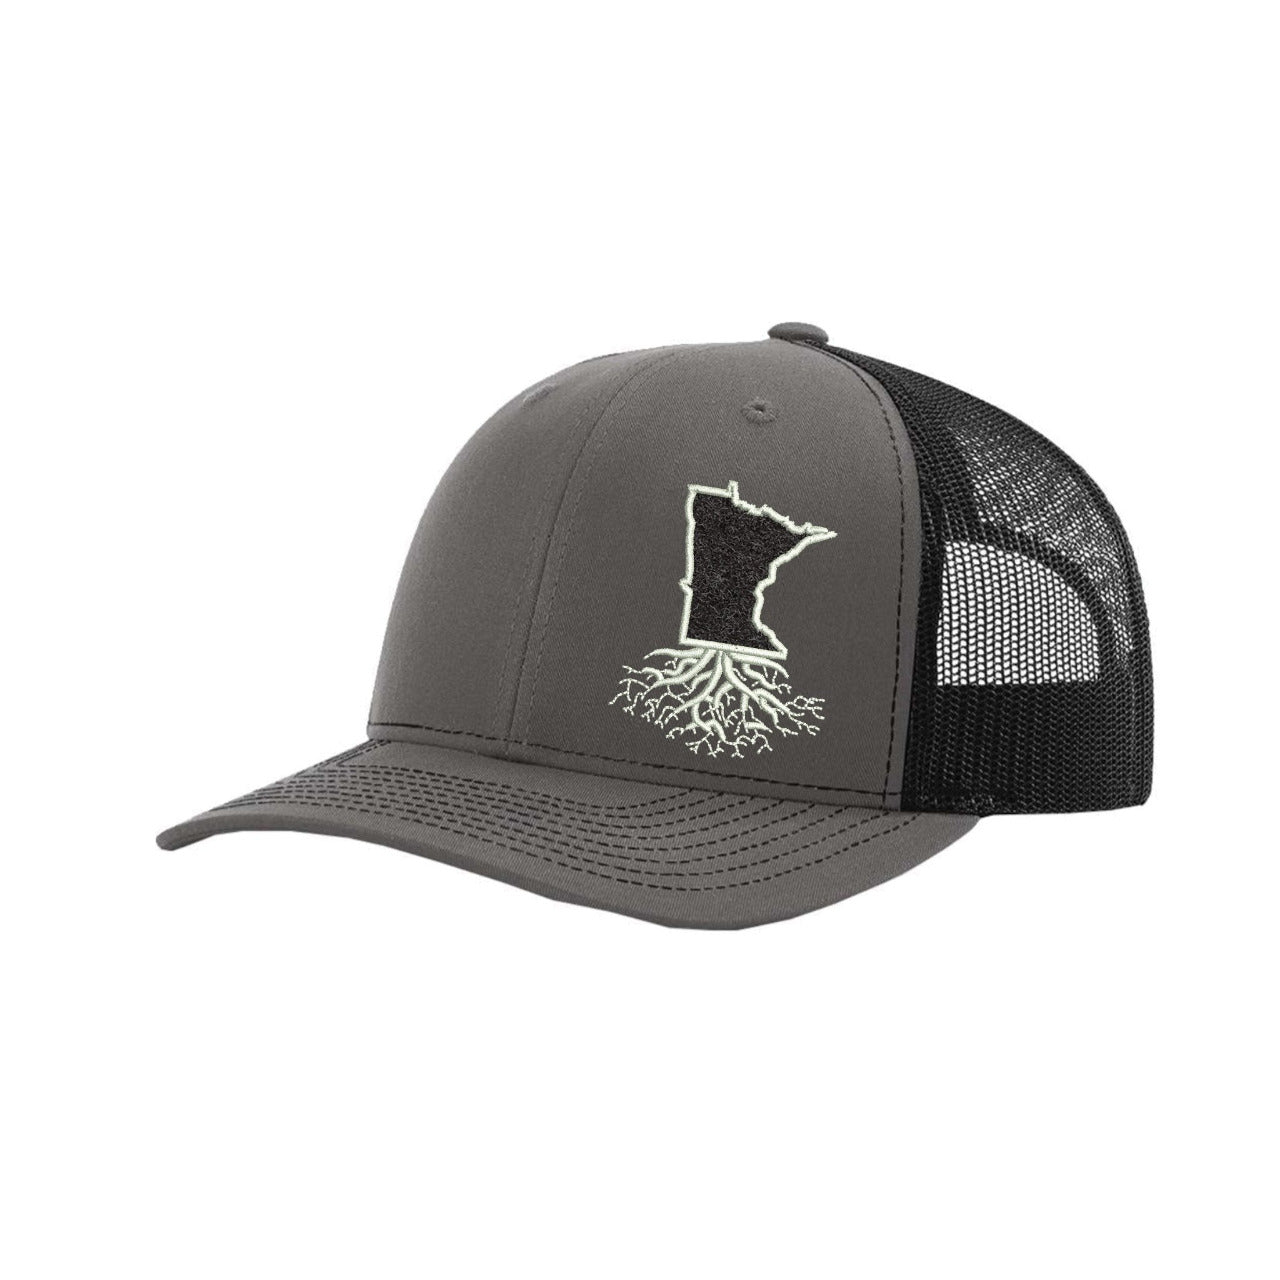 Minnesota Hook & Loop Trucker Cap - Hats